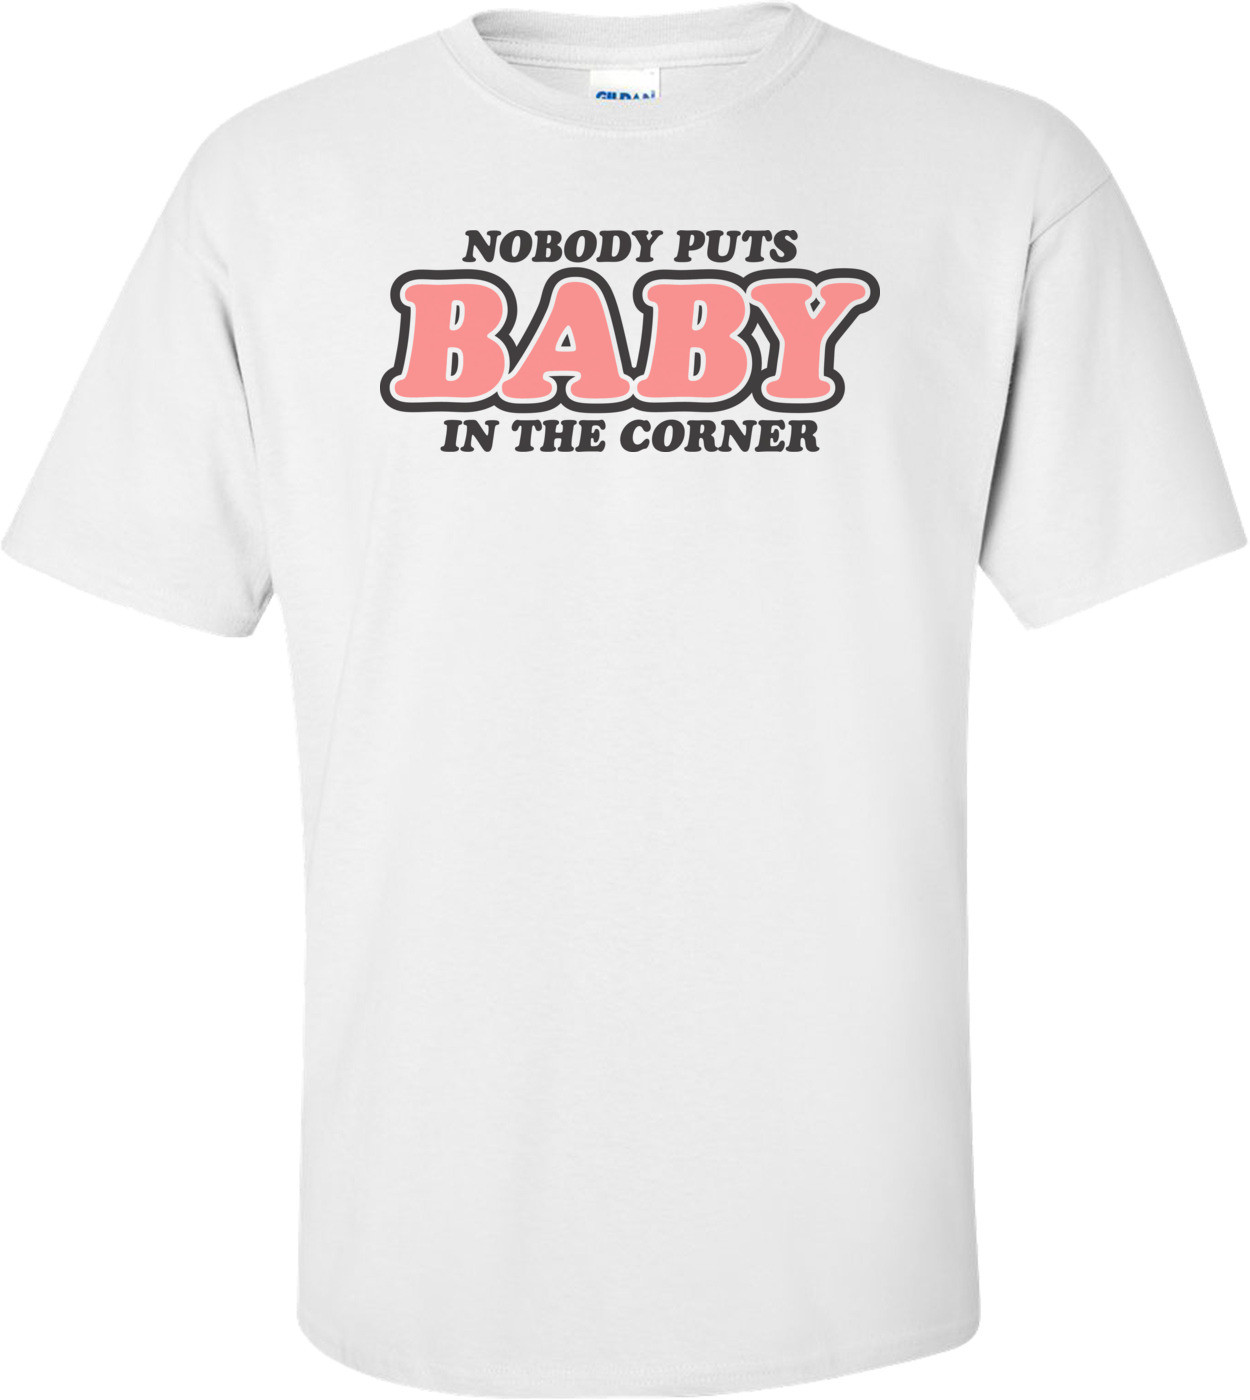 Nobody Puts Baby In The Corner Patrick Swayze Tribute - Dirty Dancing T-shirt 